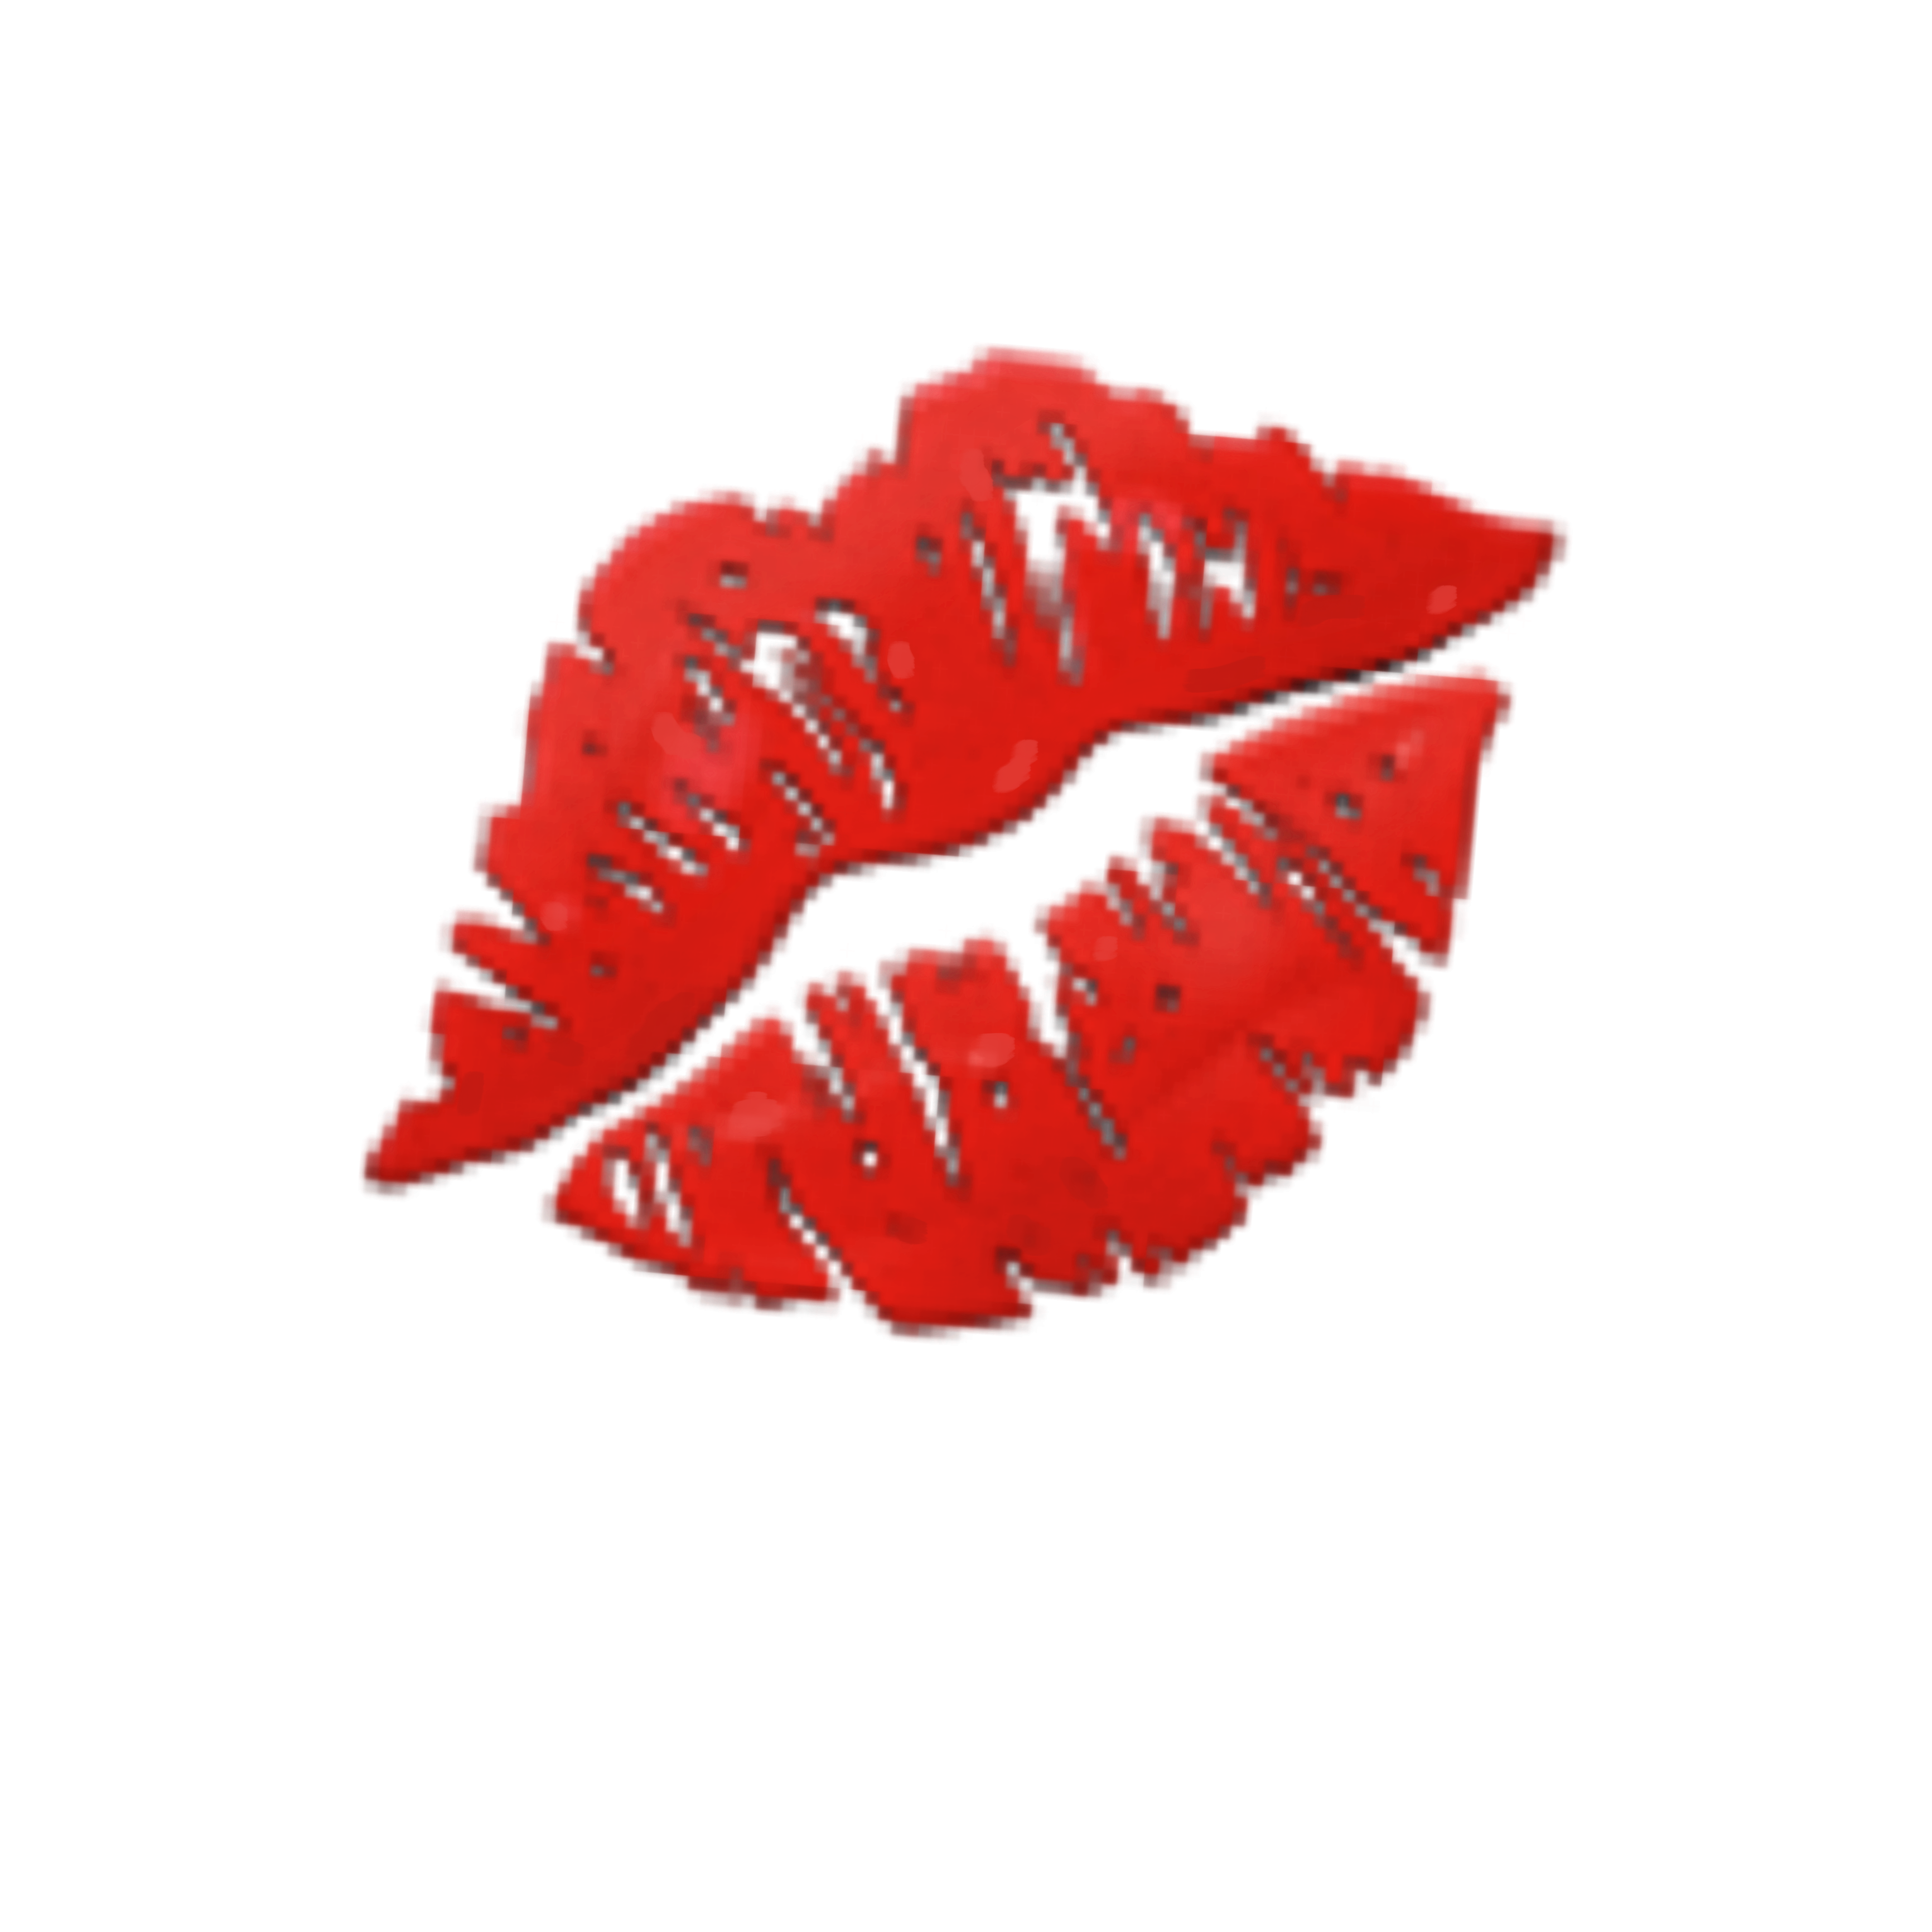 This visual is about kiss emoji emojisstickers red lips freetoedit #kiss #e...